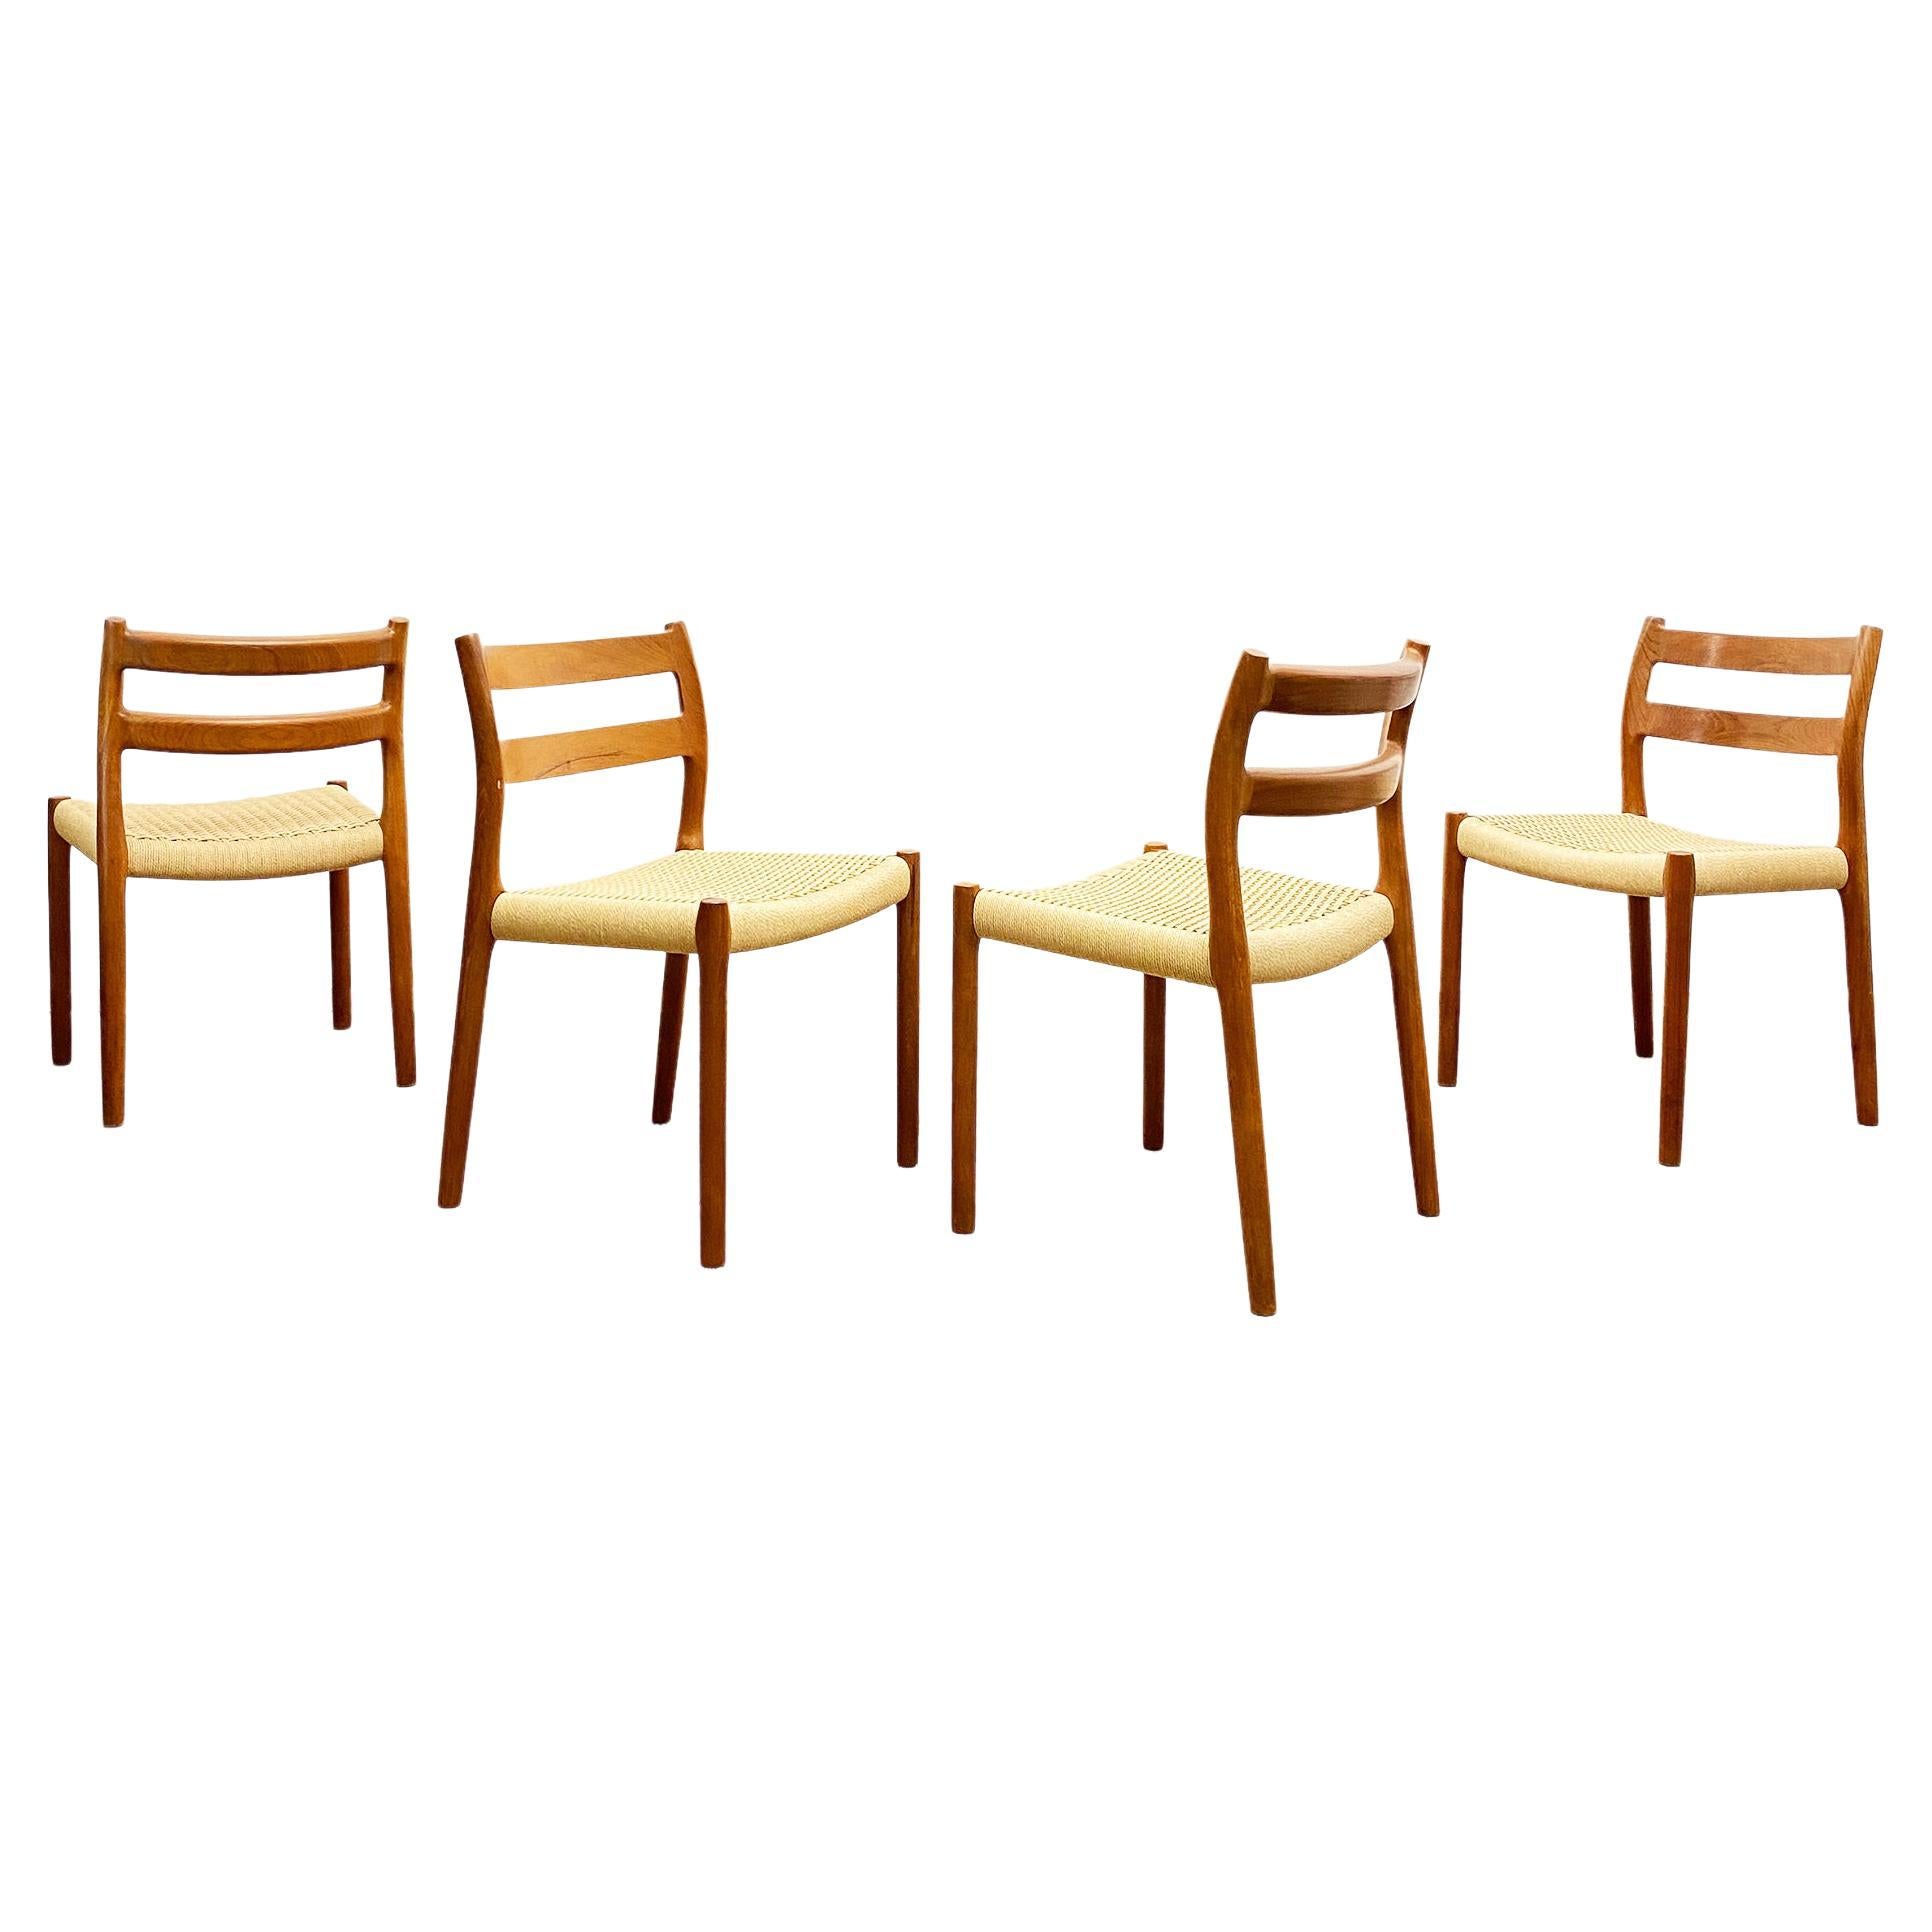 4 Danish Mid-Century Teak Dining Chairs #84 by Niels O. Møller for J. L. Moller